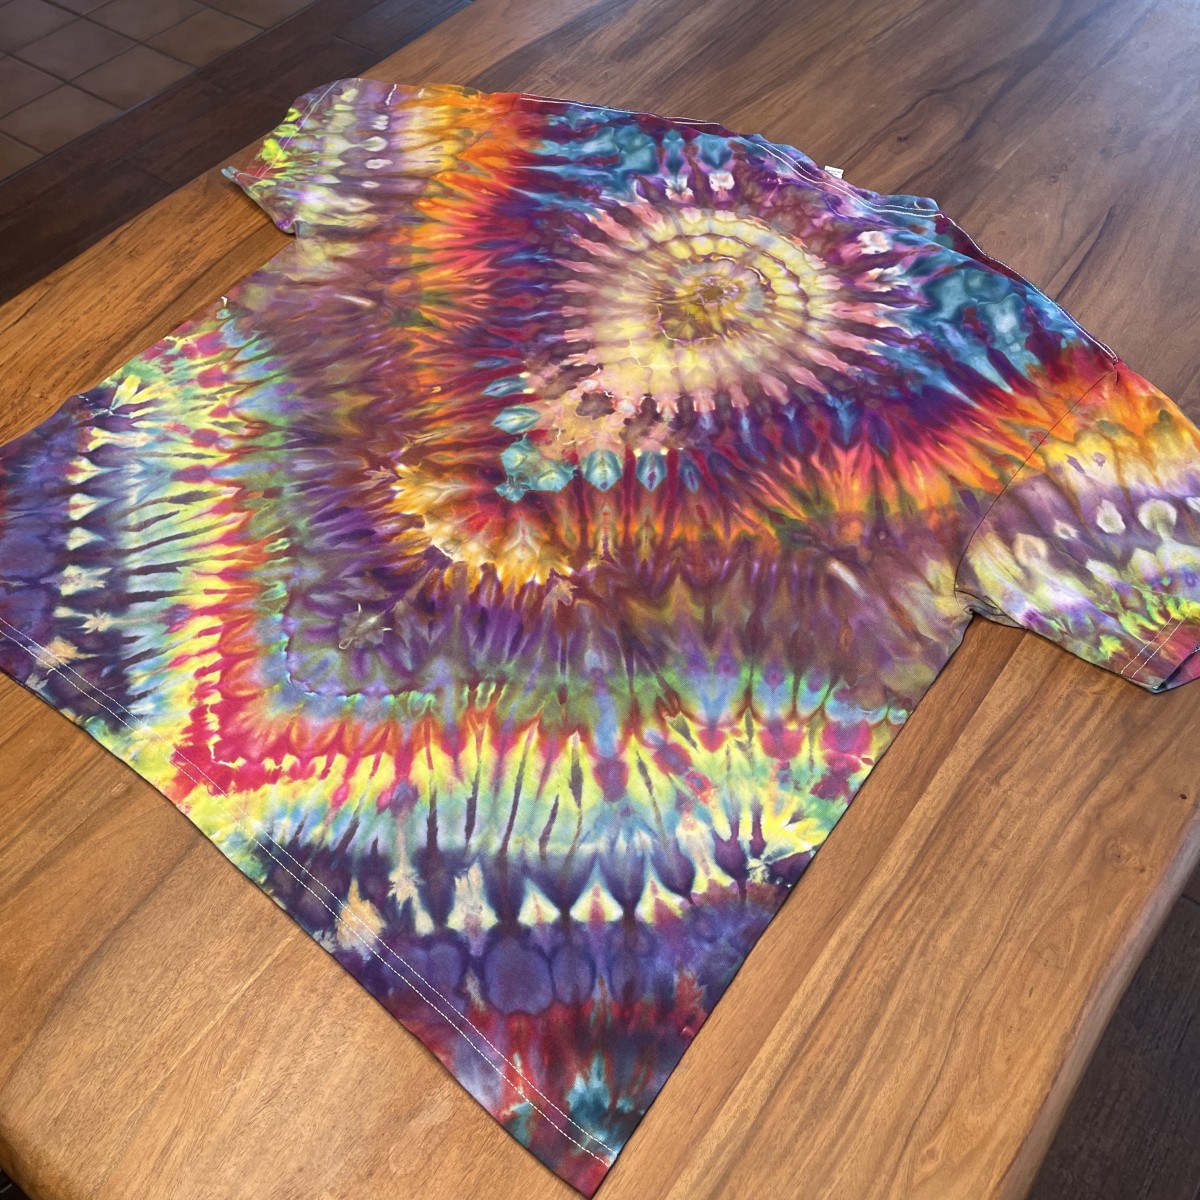 Large size “Face Melter” tie dye T-shirt by Matt Thrash